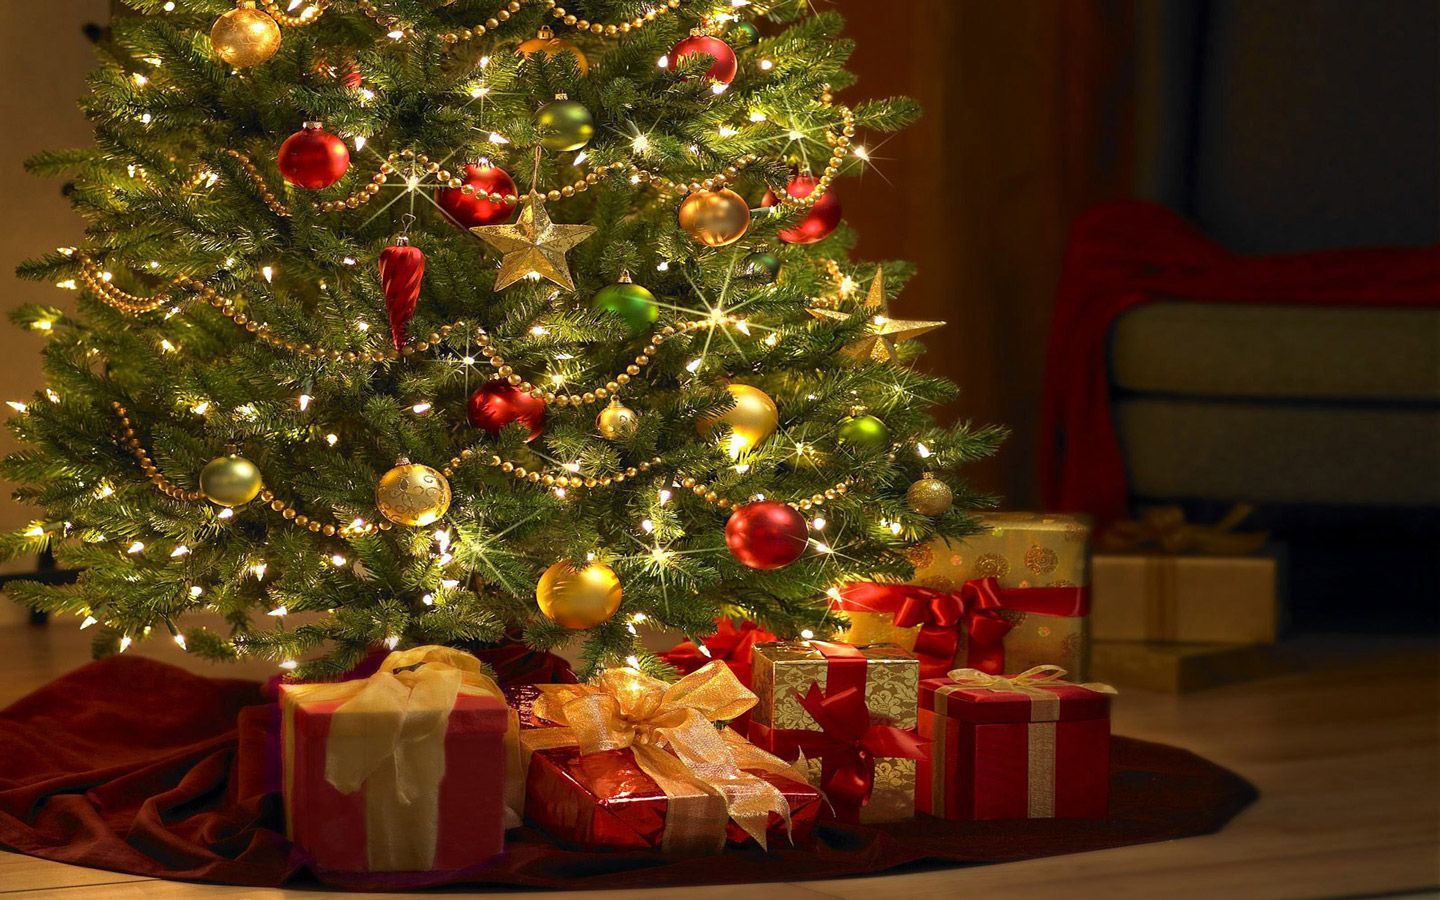 Beautiful Trees Wallpaper for Desktop. Free Beautiful Christmas Tree With Gifts. Christmas tree wallpaper, Christmas tree decorations, Beautiful christmas trees